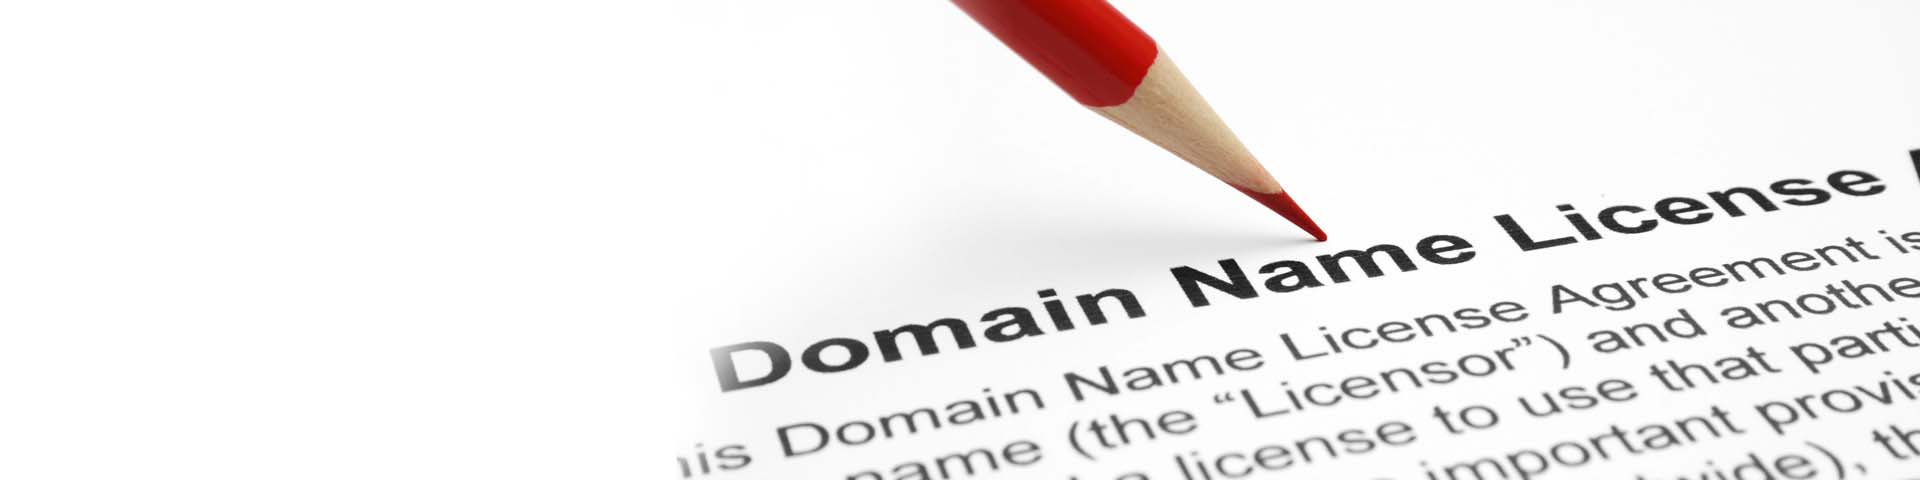 PMZ Domain Name Registration